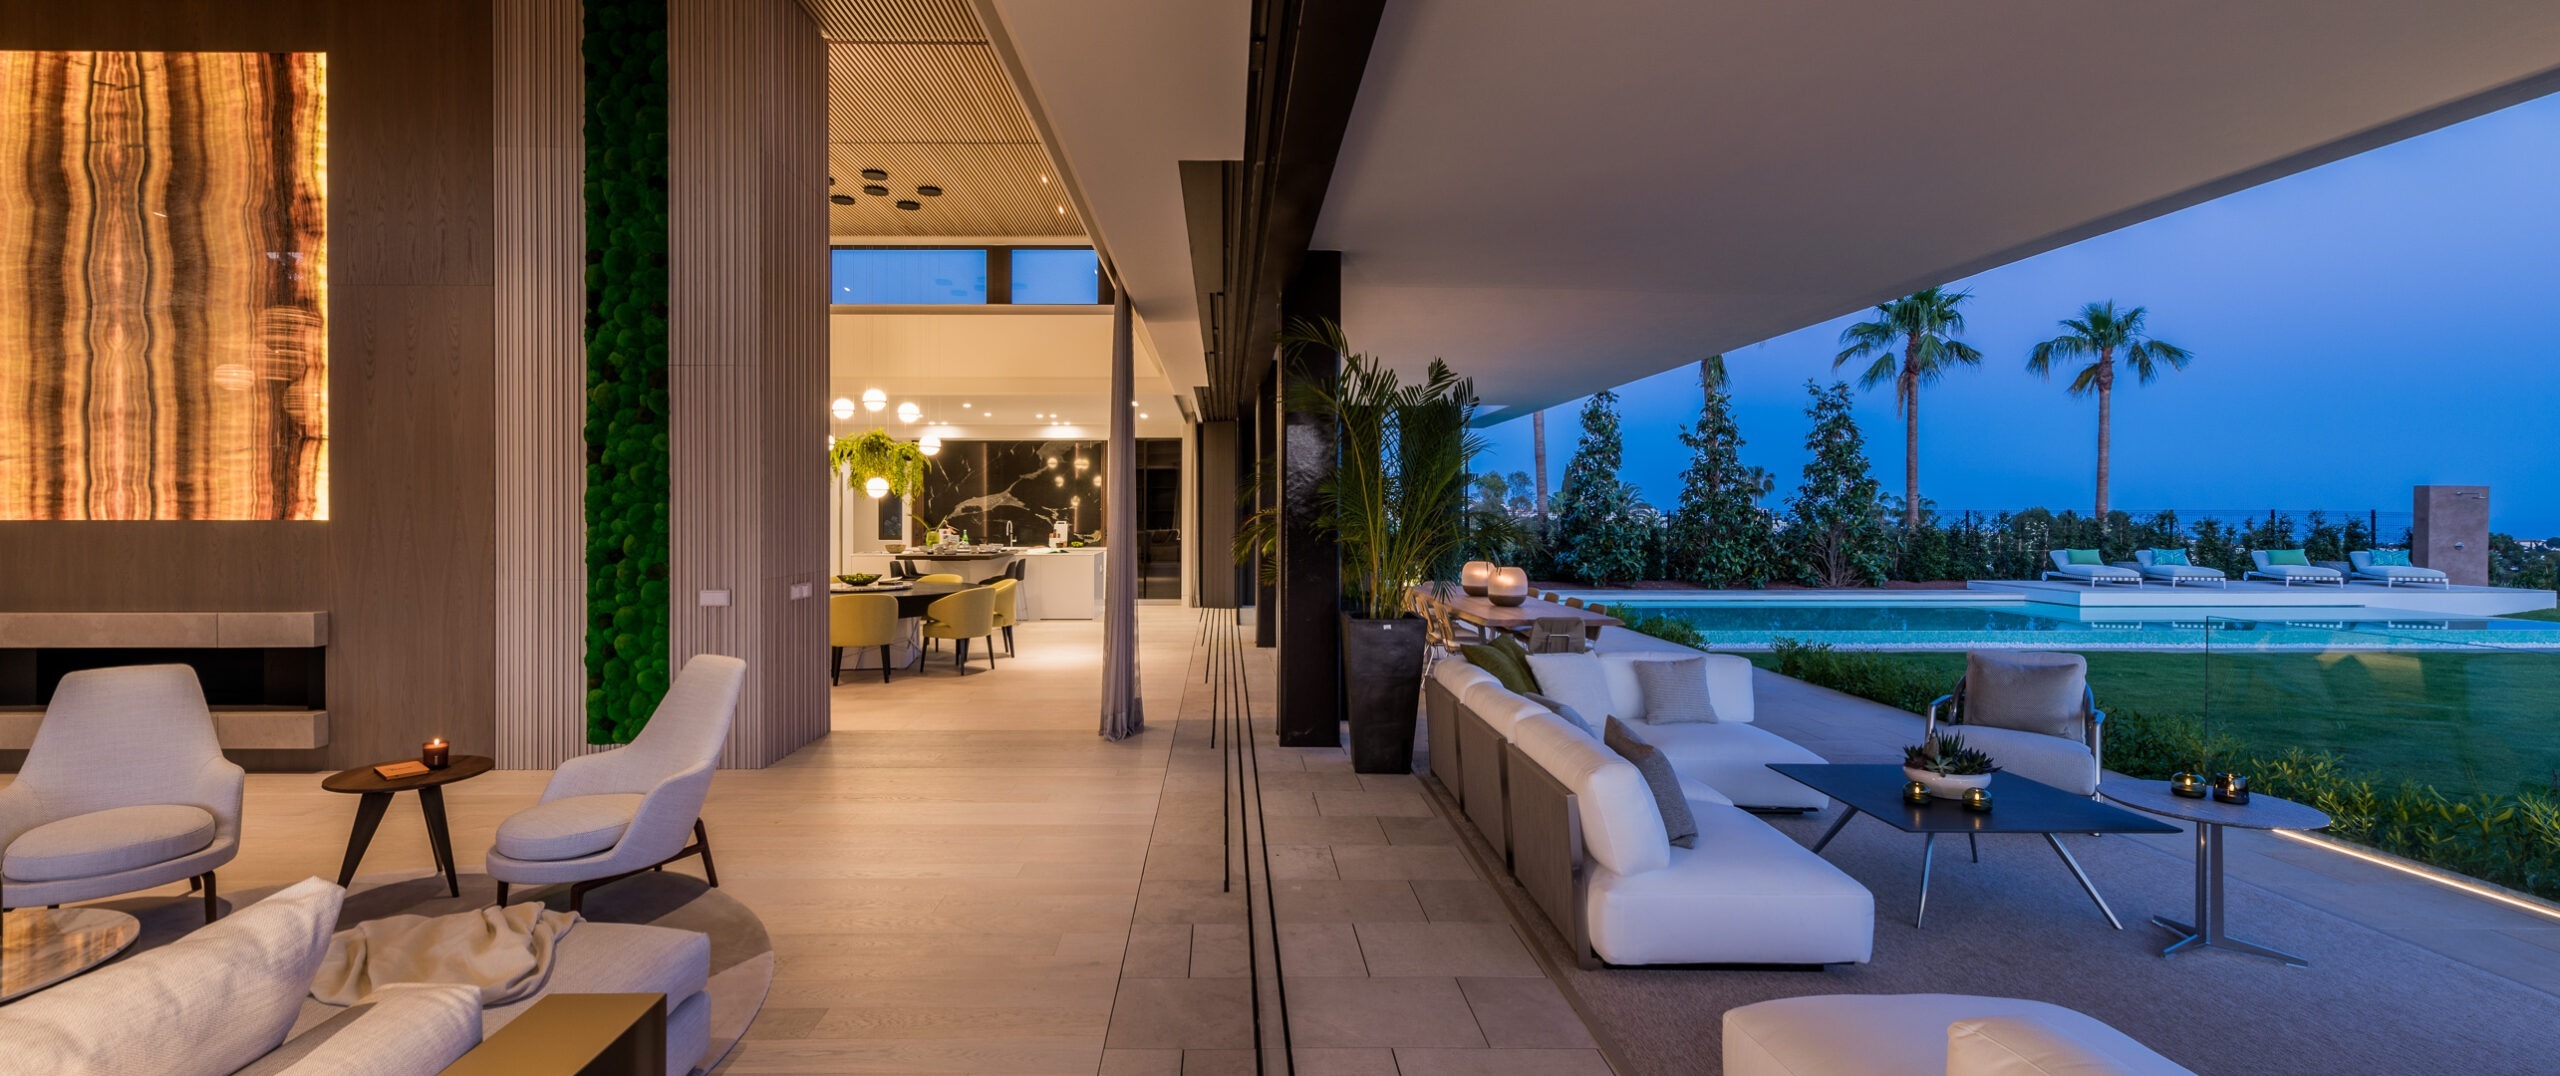 Exclusive top villa terrace- El Herrojo - Benahavis